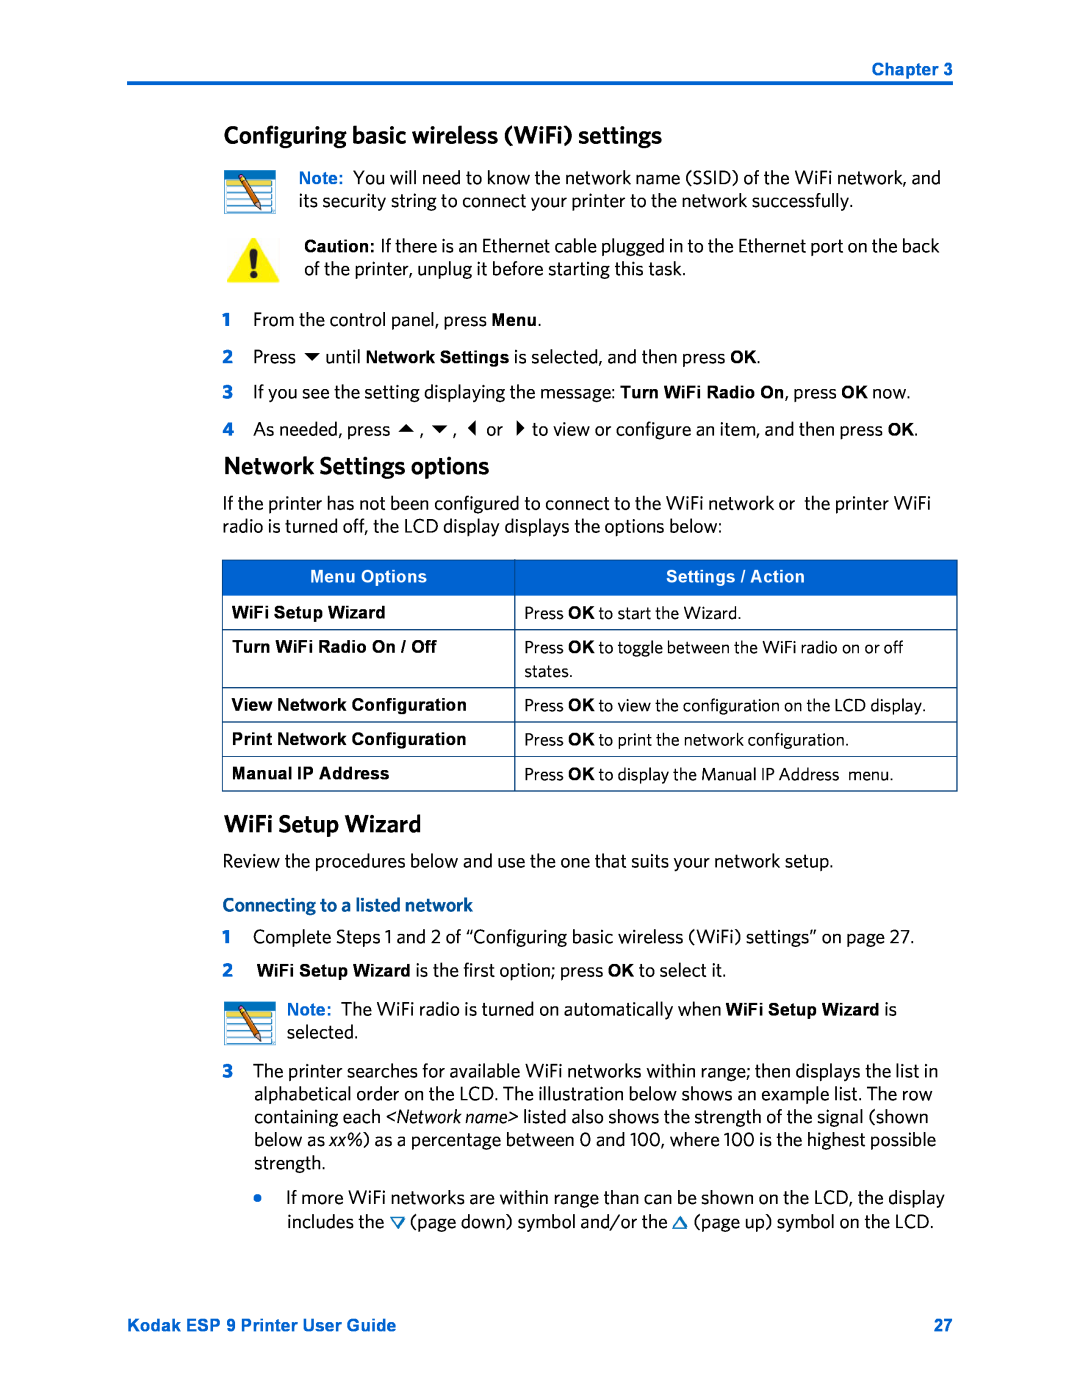 Kodak ESP 9 manual Configuring basic wireless WiFi settings, Network Settings options, WiFi Setup Wizard 